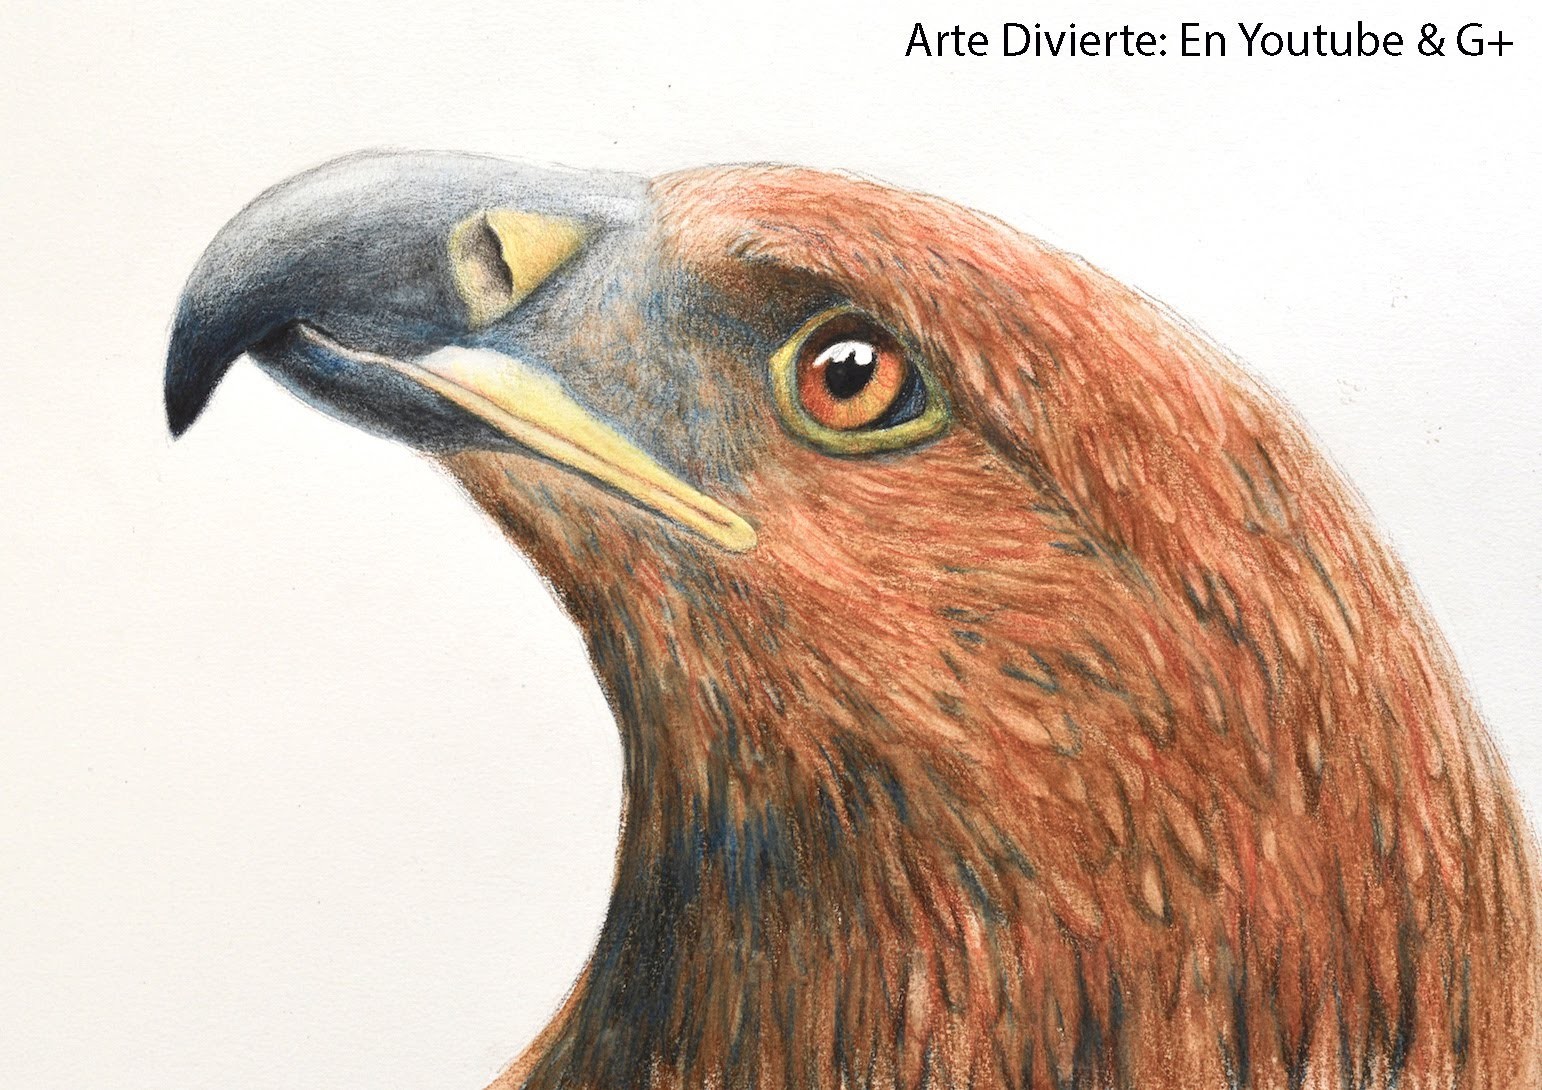 Cómo dibujar una cabeza de águila con lápices de colores acuareleables - Arte Divierte